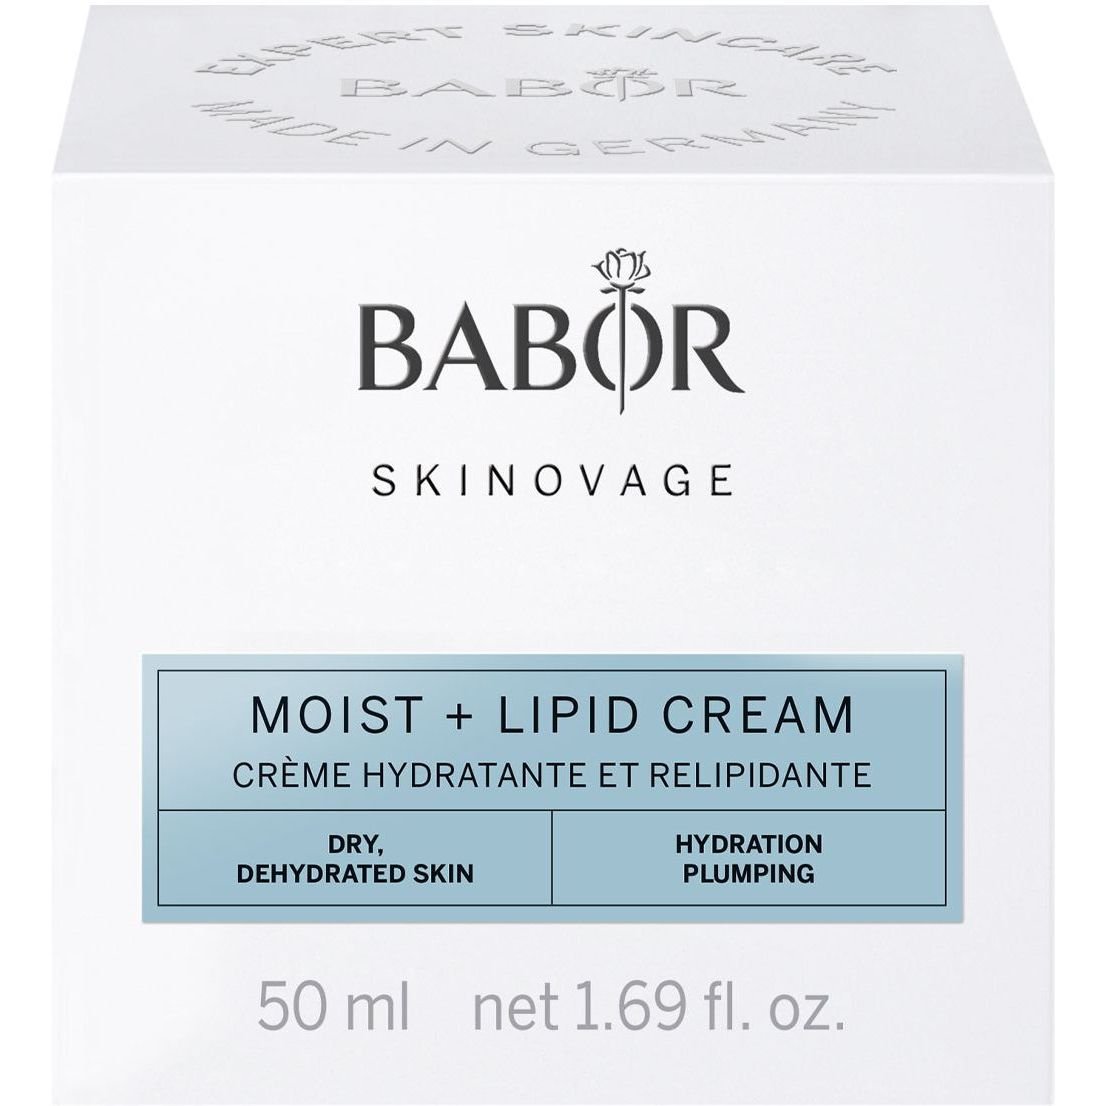 Увлажняющий крем Babor Skinovage Moisturizing Lipid Cream 50 мл - фото 2